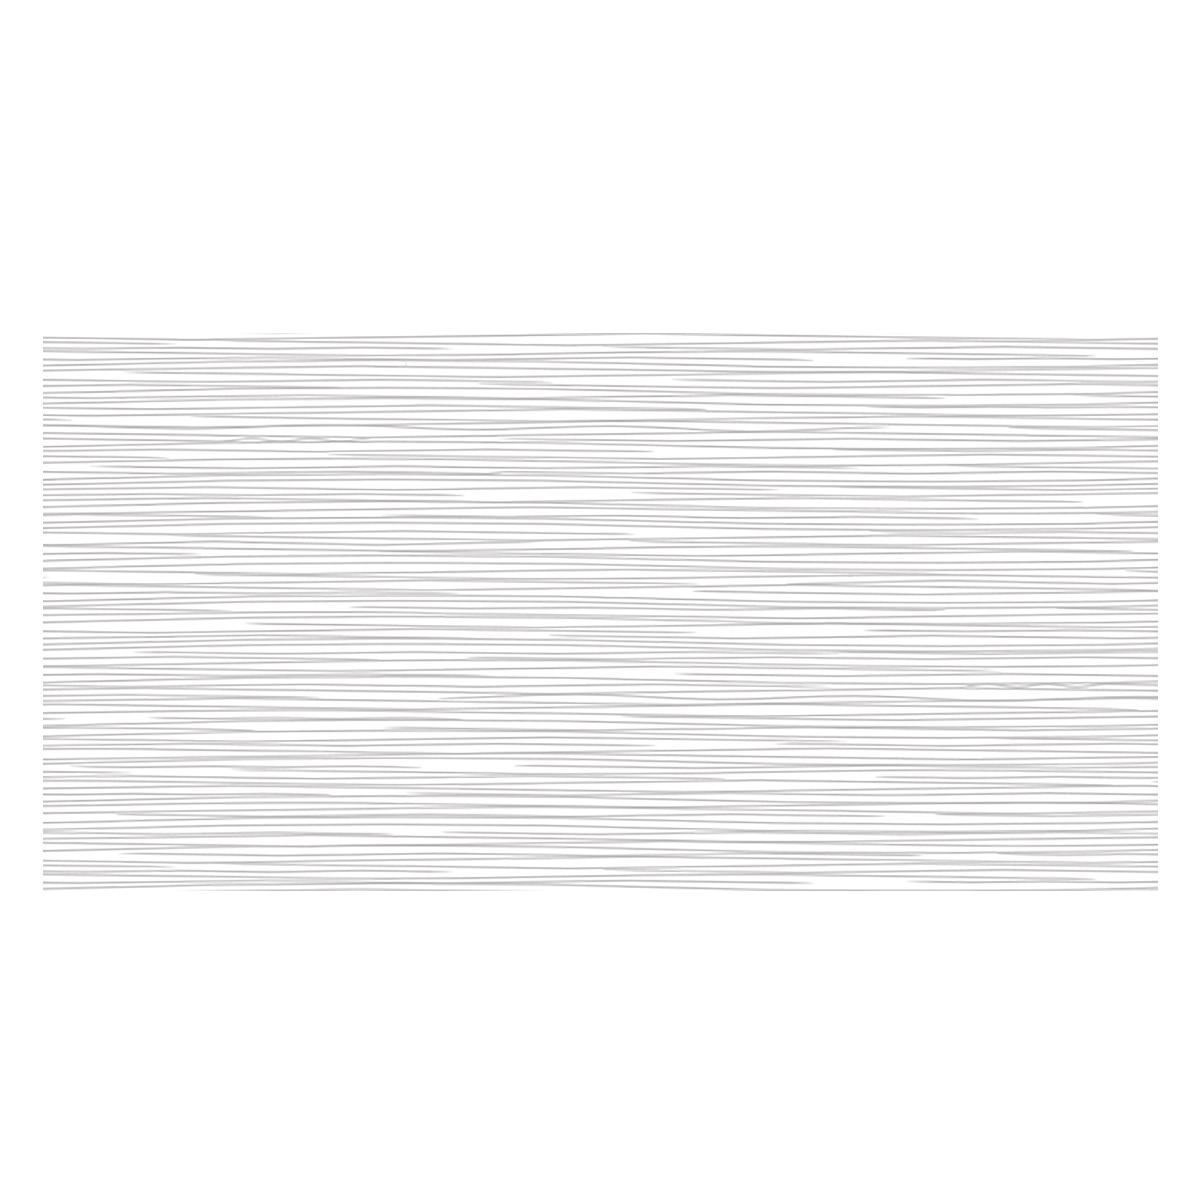 Mayólica Scala Fill Blanco Brillante - 30X60 cm - 1.81 m2